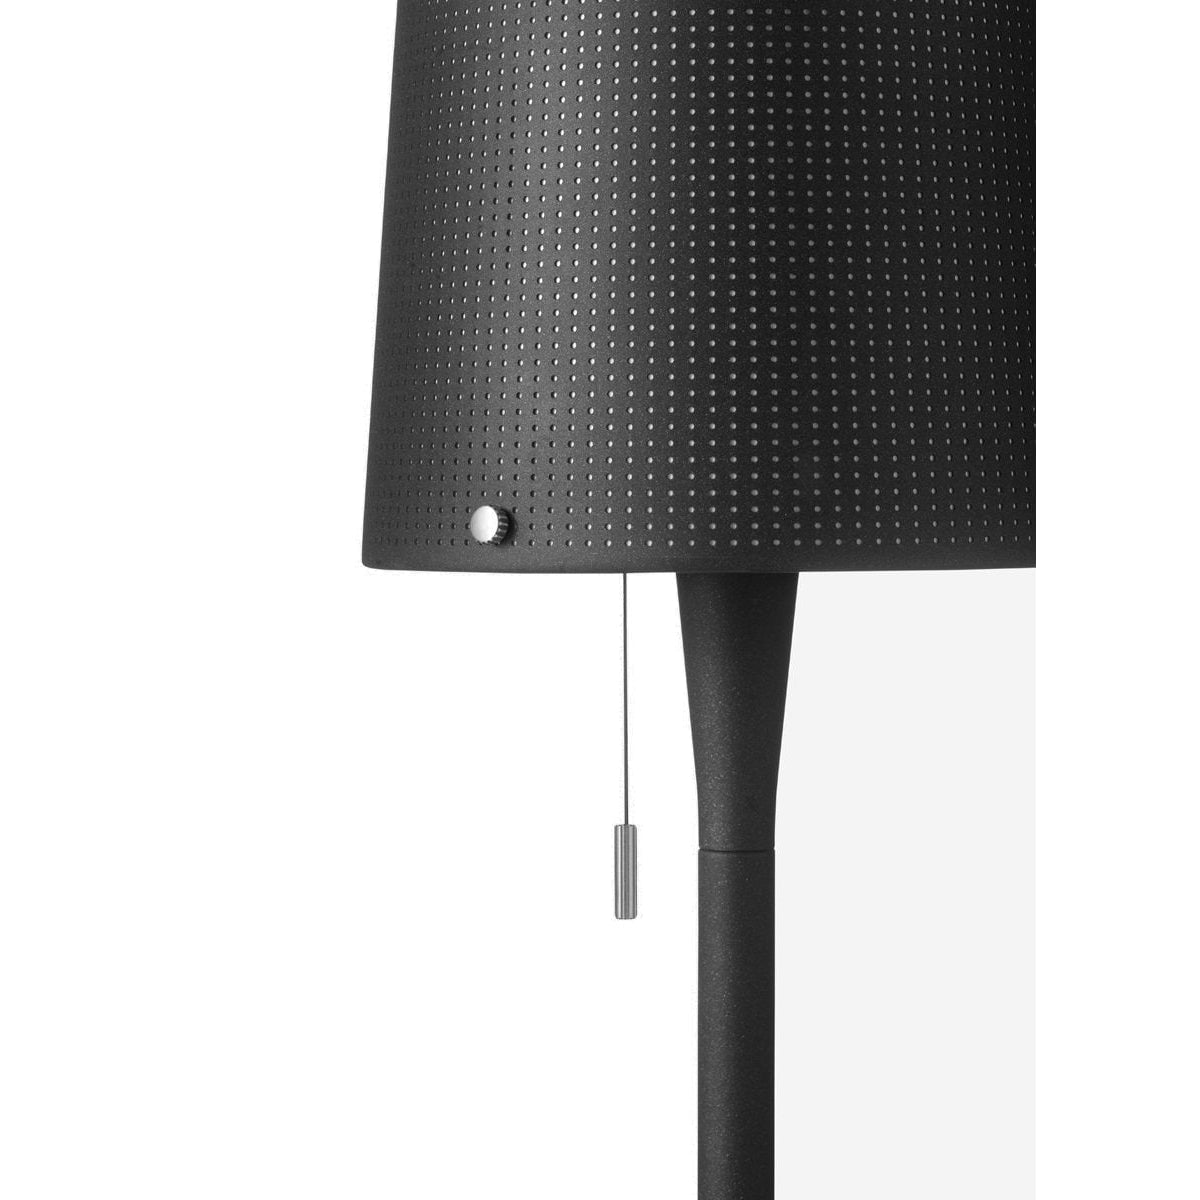 Lampe de table Vipp 530, noir